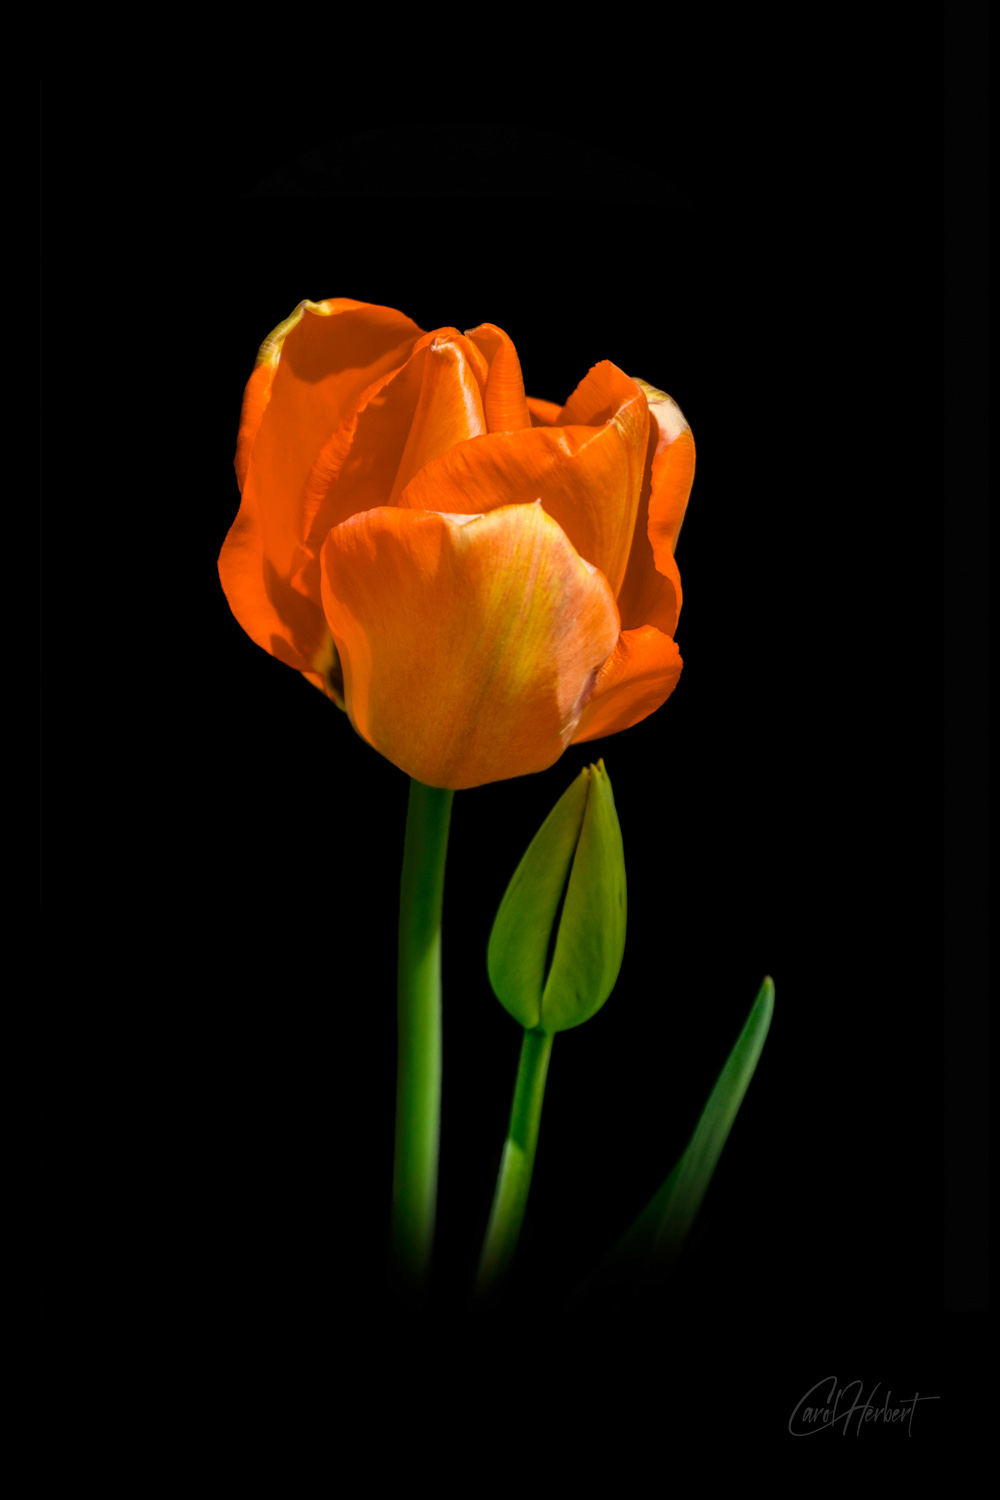 A single orange tulip on a black background